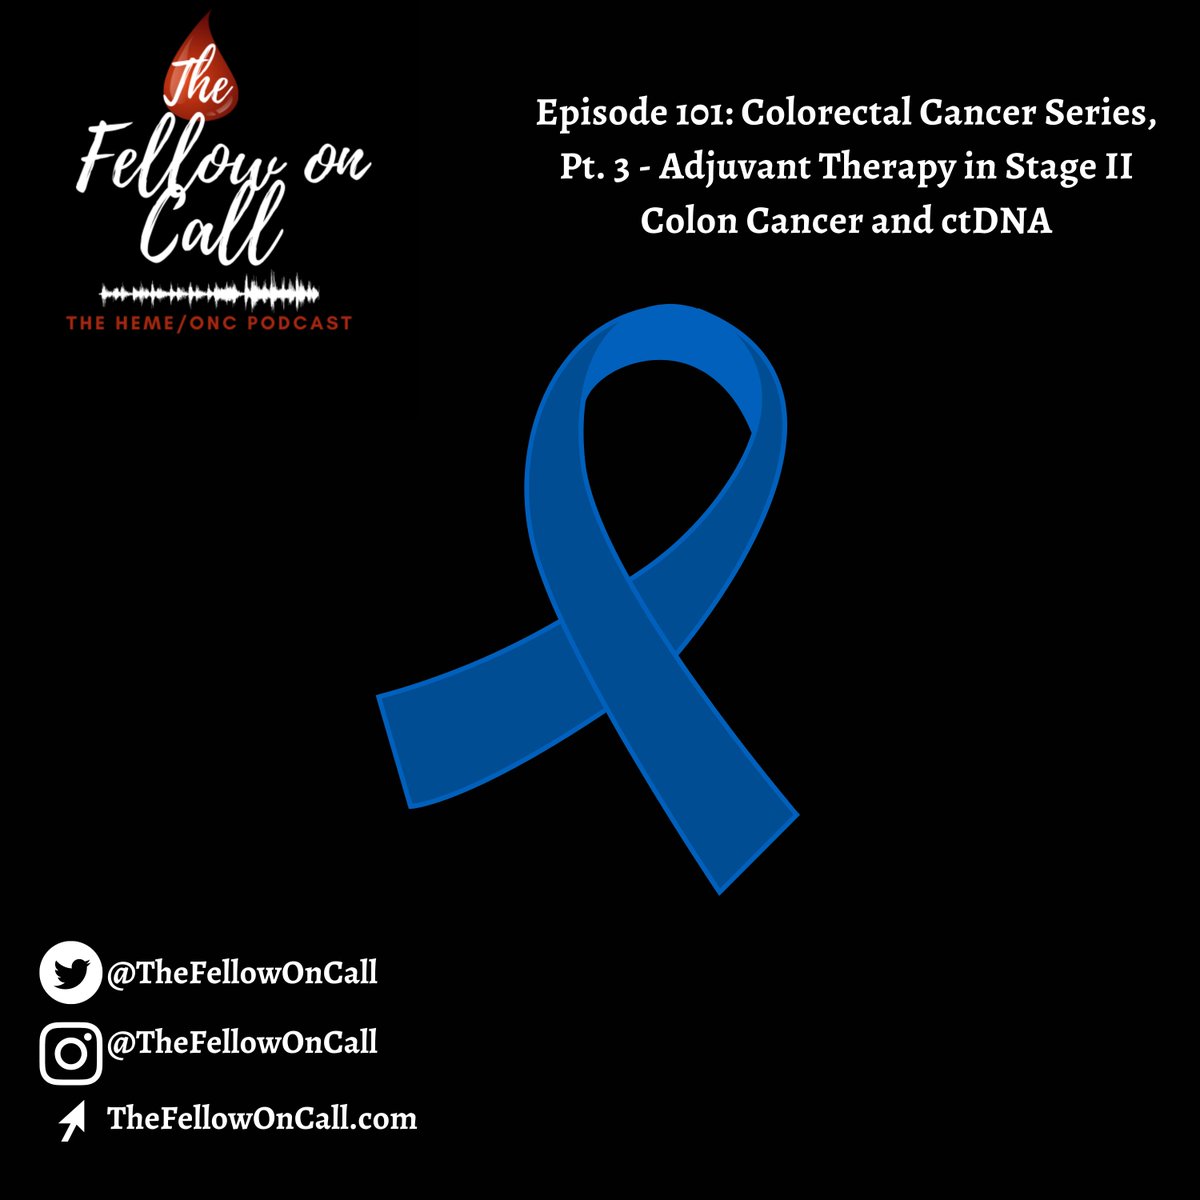 New episode alert! Link in bio! @NUHemOncFellow @UMHemOncFellows @OchsnerHemOnc @UtahHemeOnc @UCDHemeOnc @VUMCHemOnc @UCHemOncFellows #MedEd #MedicalEducation #Hematology #Oncology #HemeOnc #Podcast #MedicalStudent #Residency #InternalMedicine